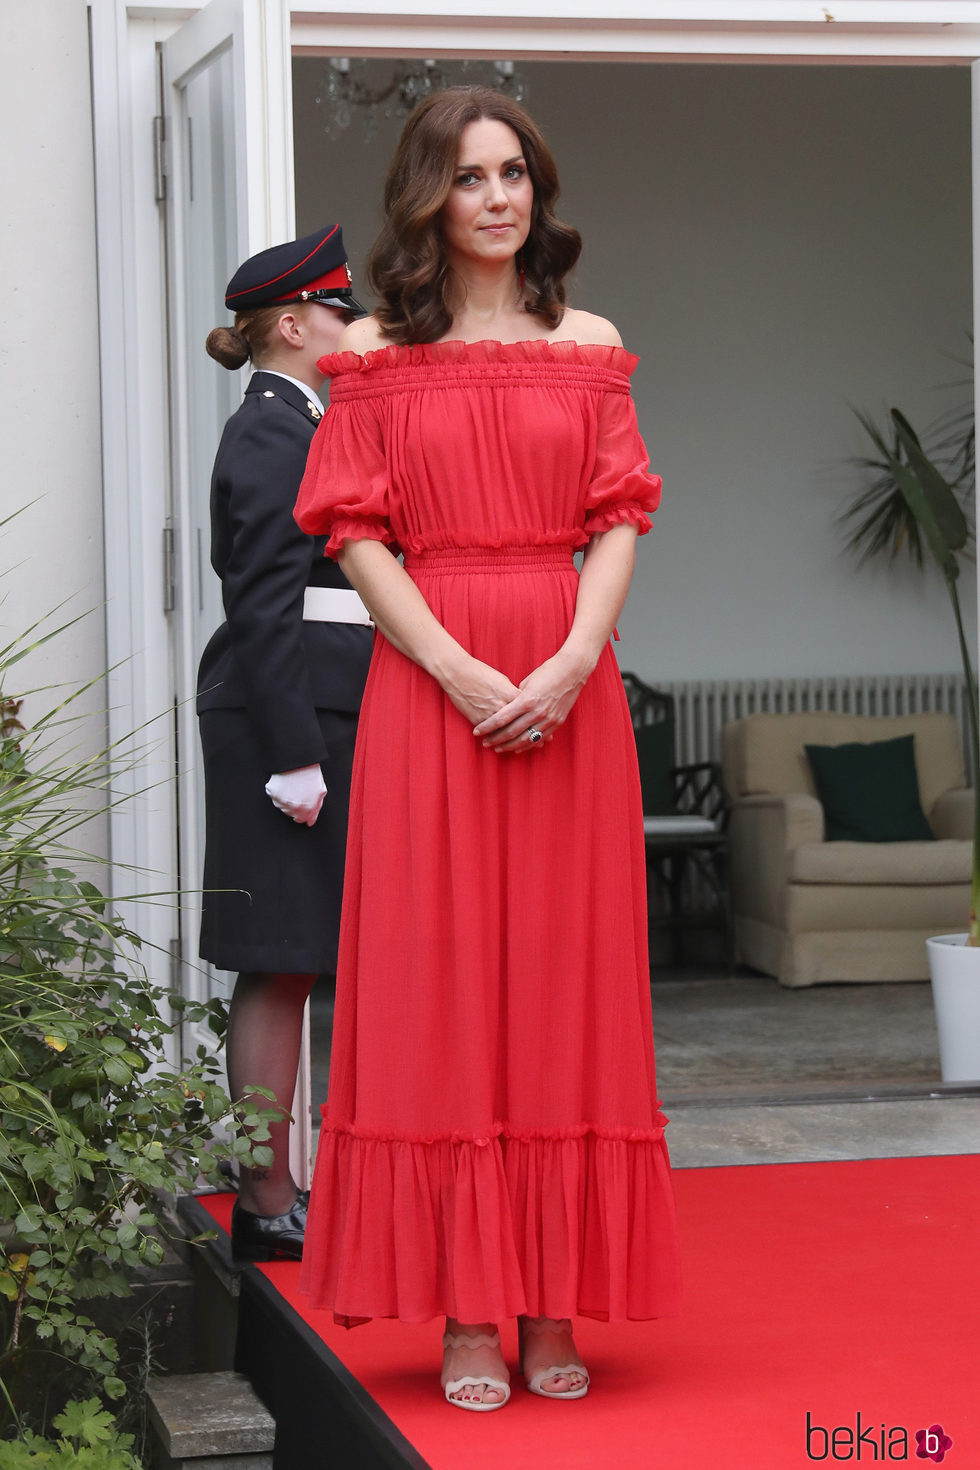 Kate Middleton con un vestido largo rojo  de Alexander McQueen